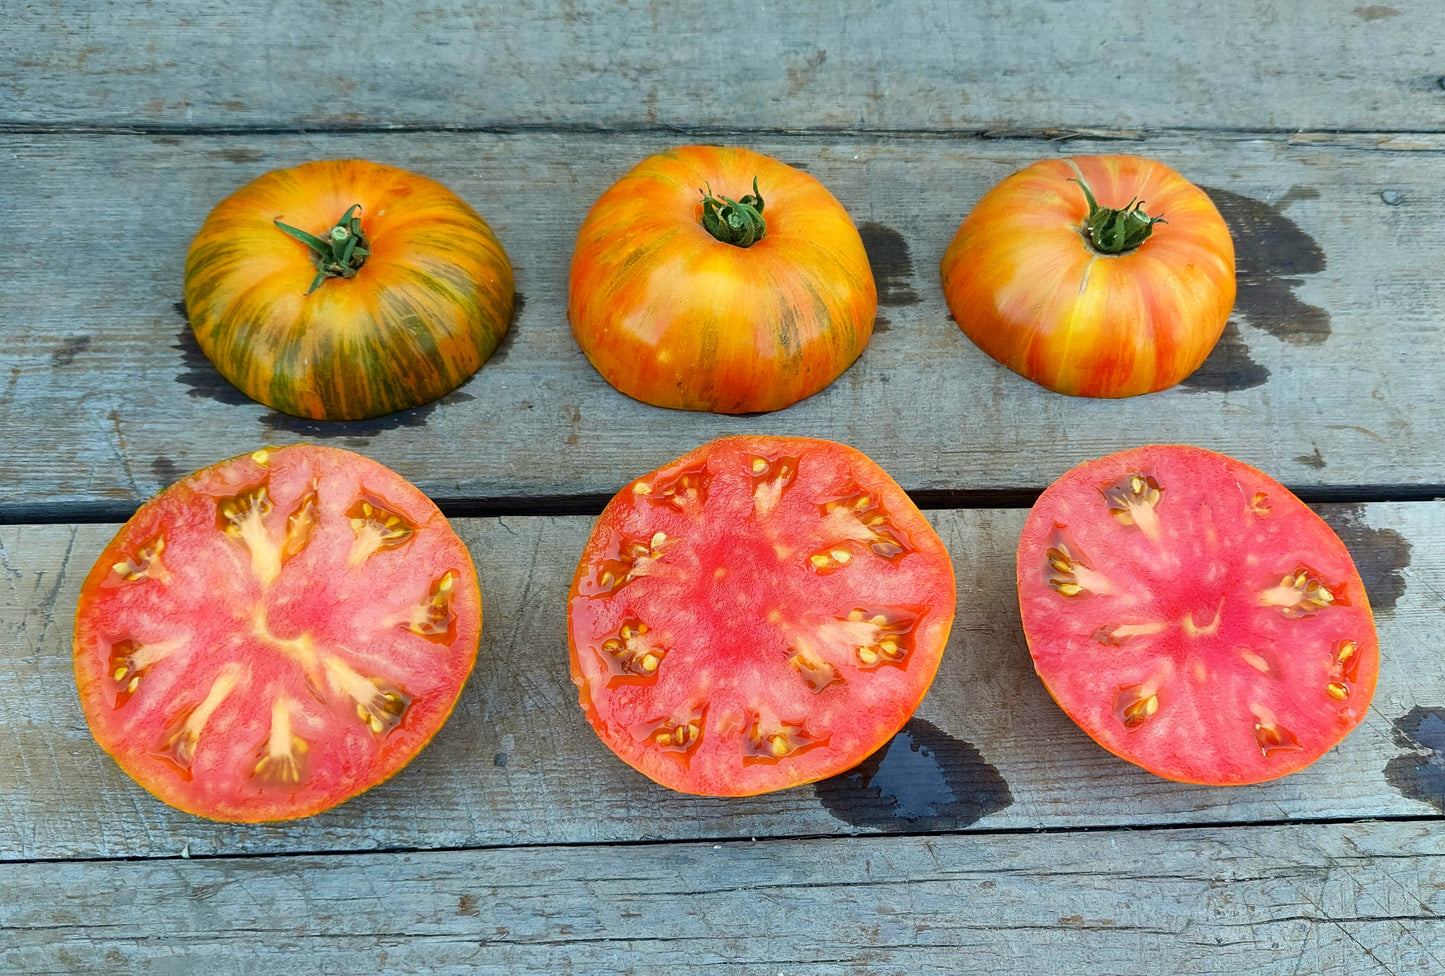 Benevento - F1 hybrid tomato seeds - 25 pack